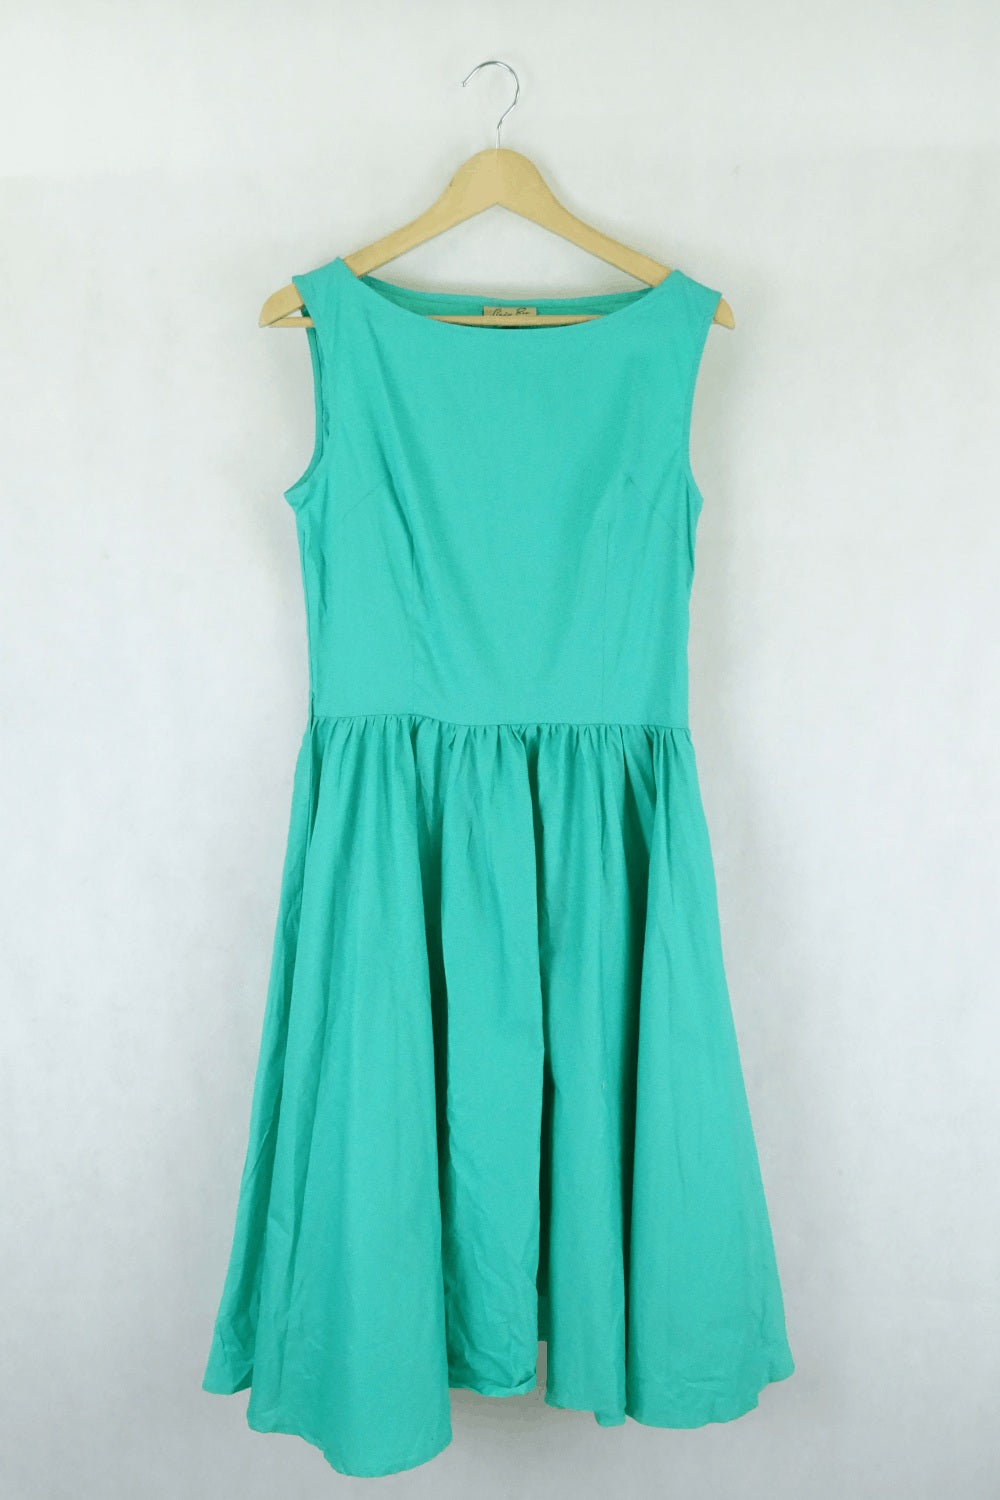 Lindy Bop Green Dress 12